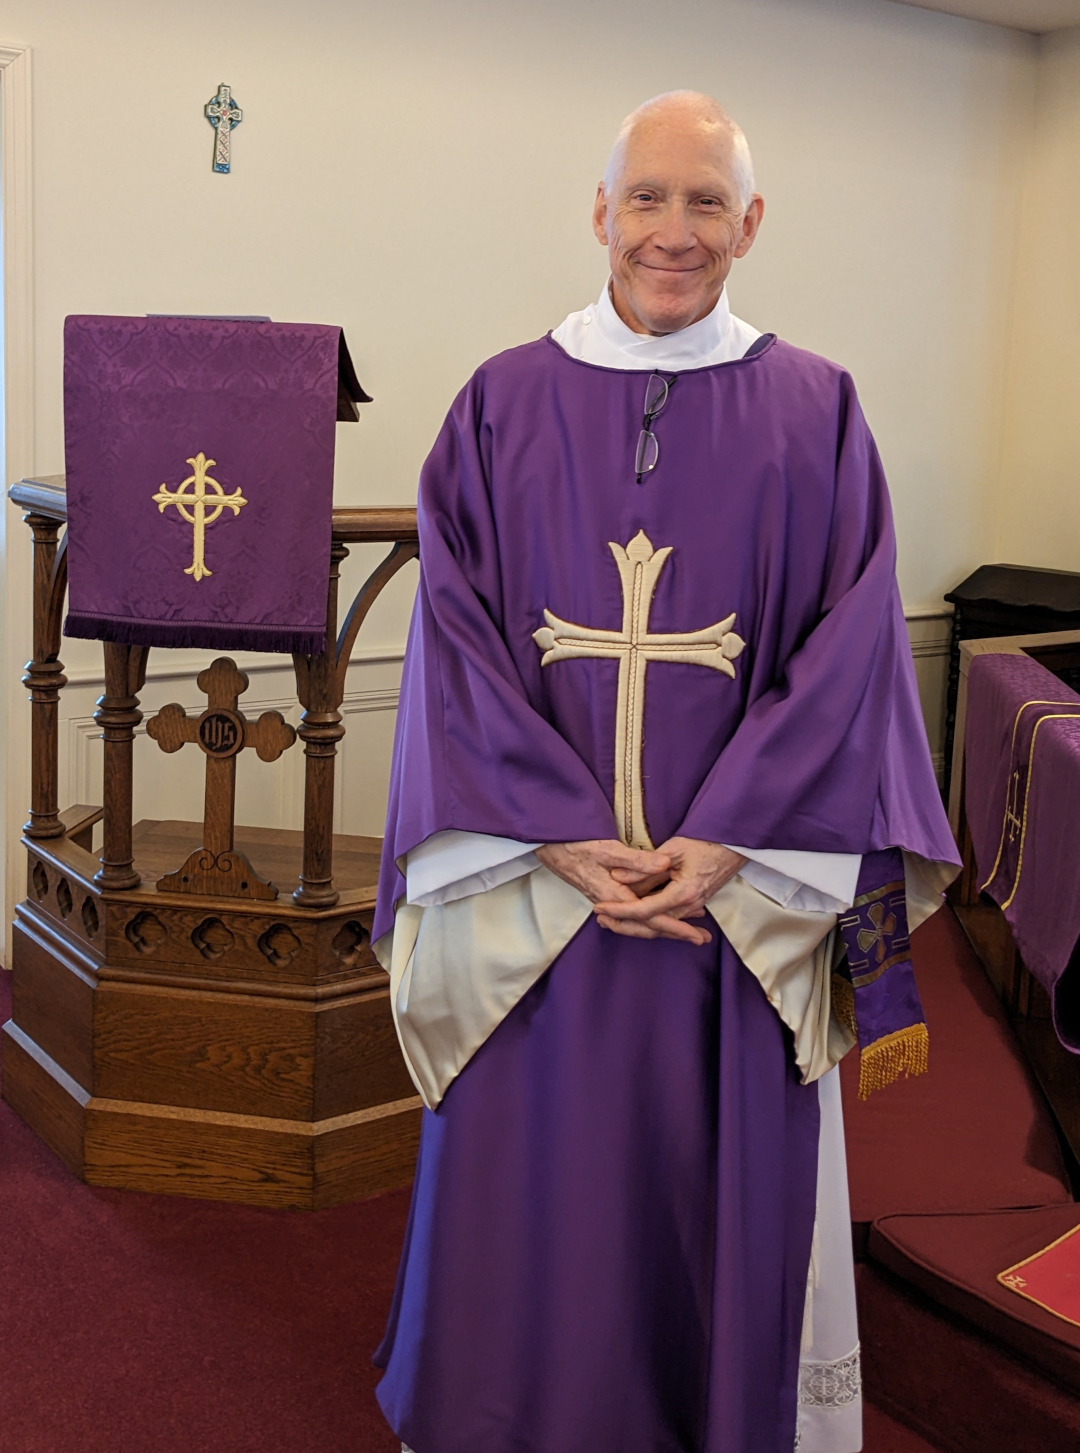 The Rev. Mr. Daniel Farley, Deacon